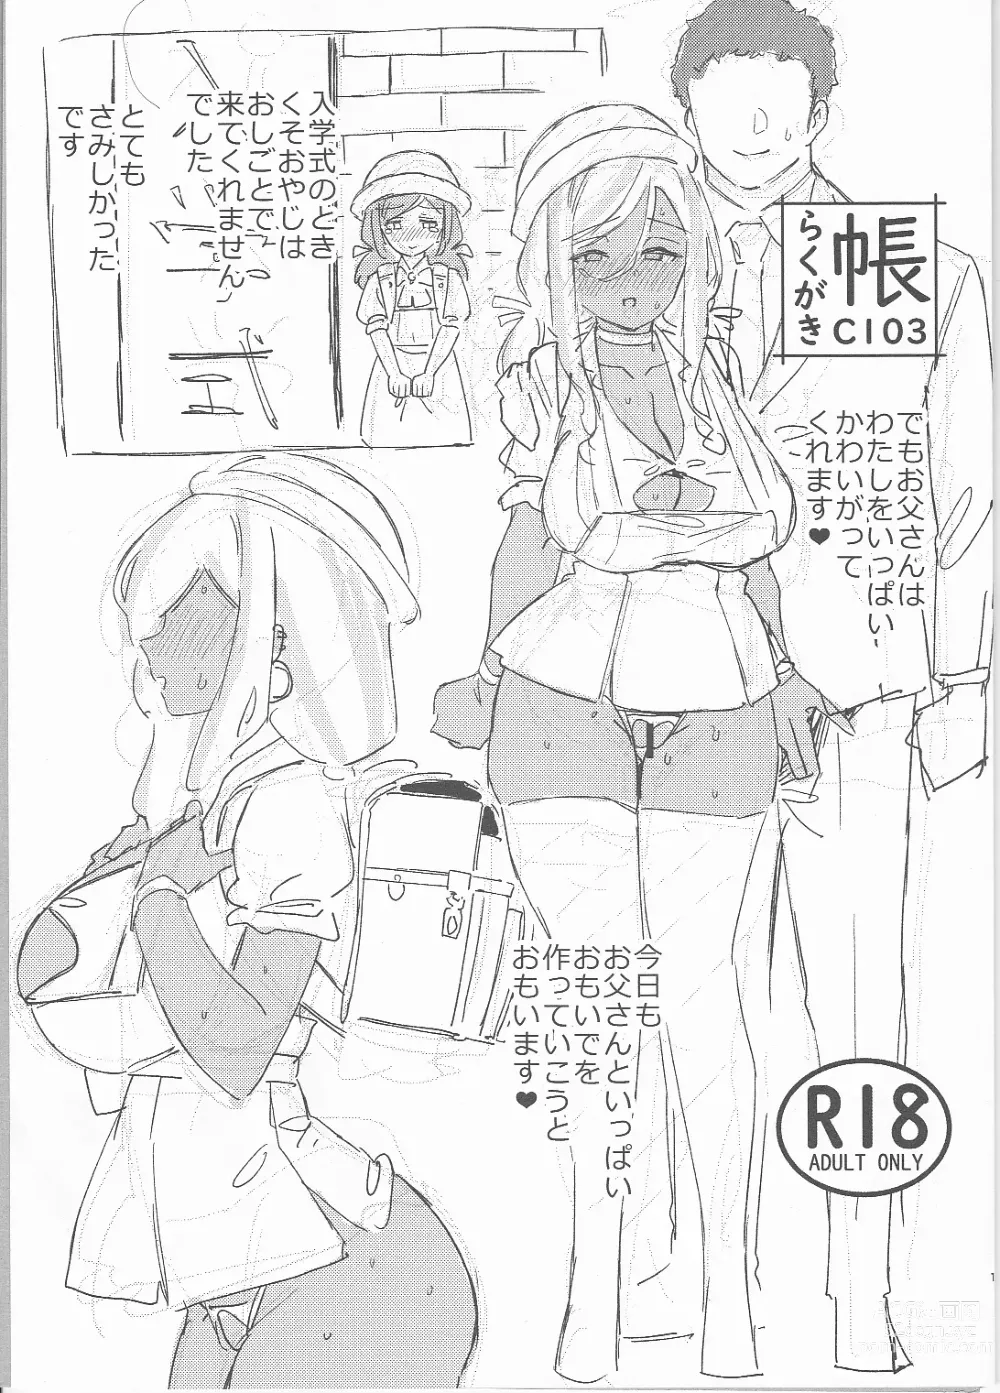 Page 1 of doujinshi Rakugakichou  C103